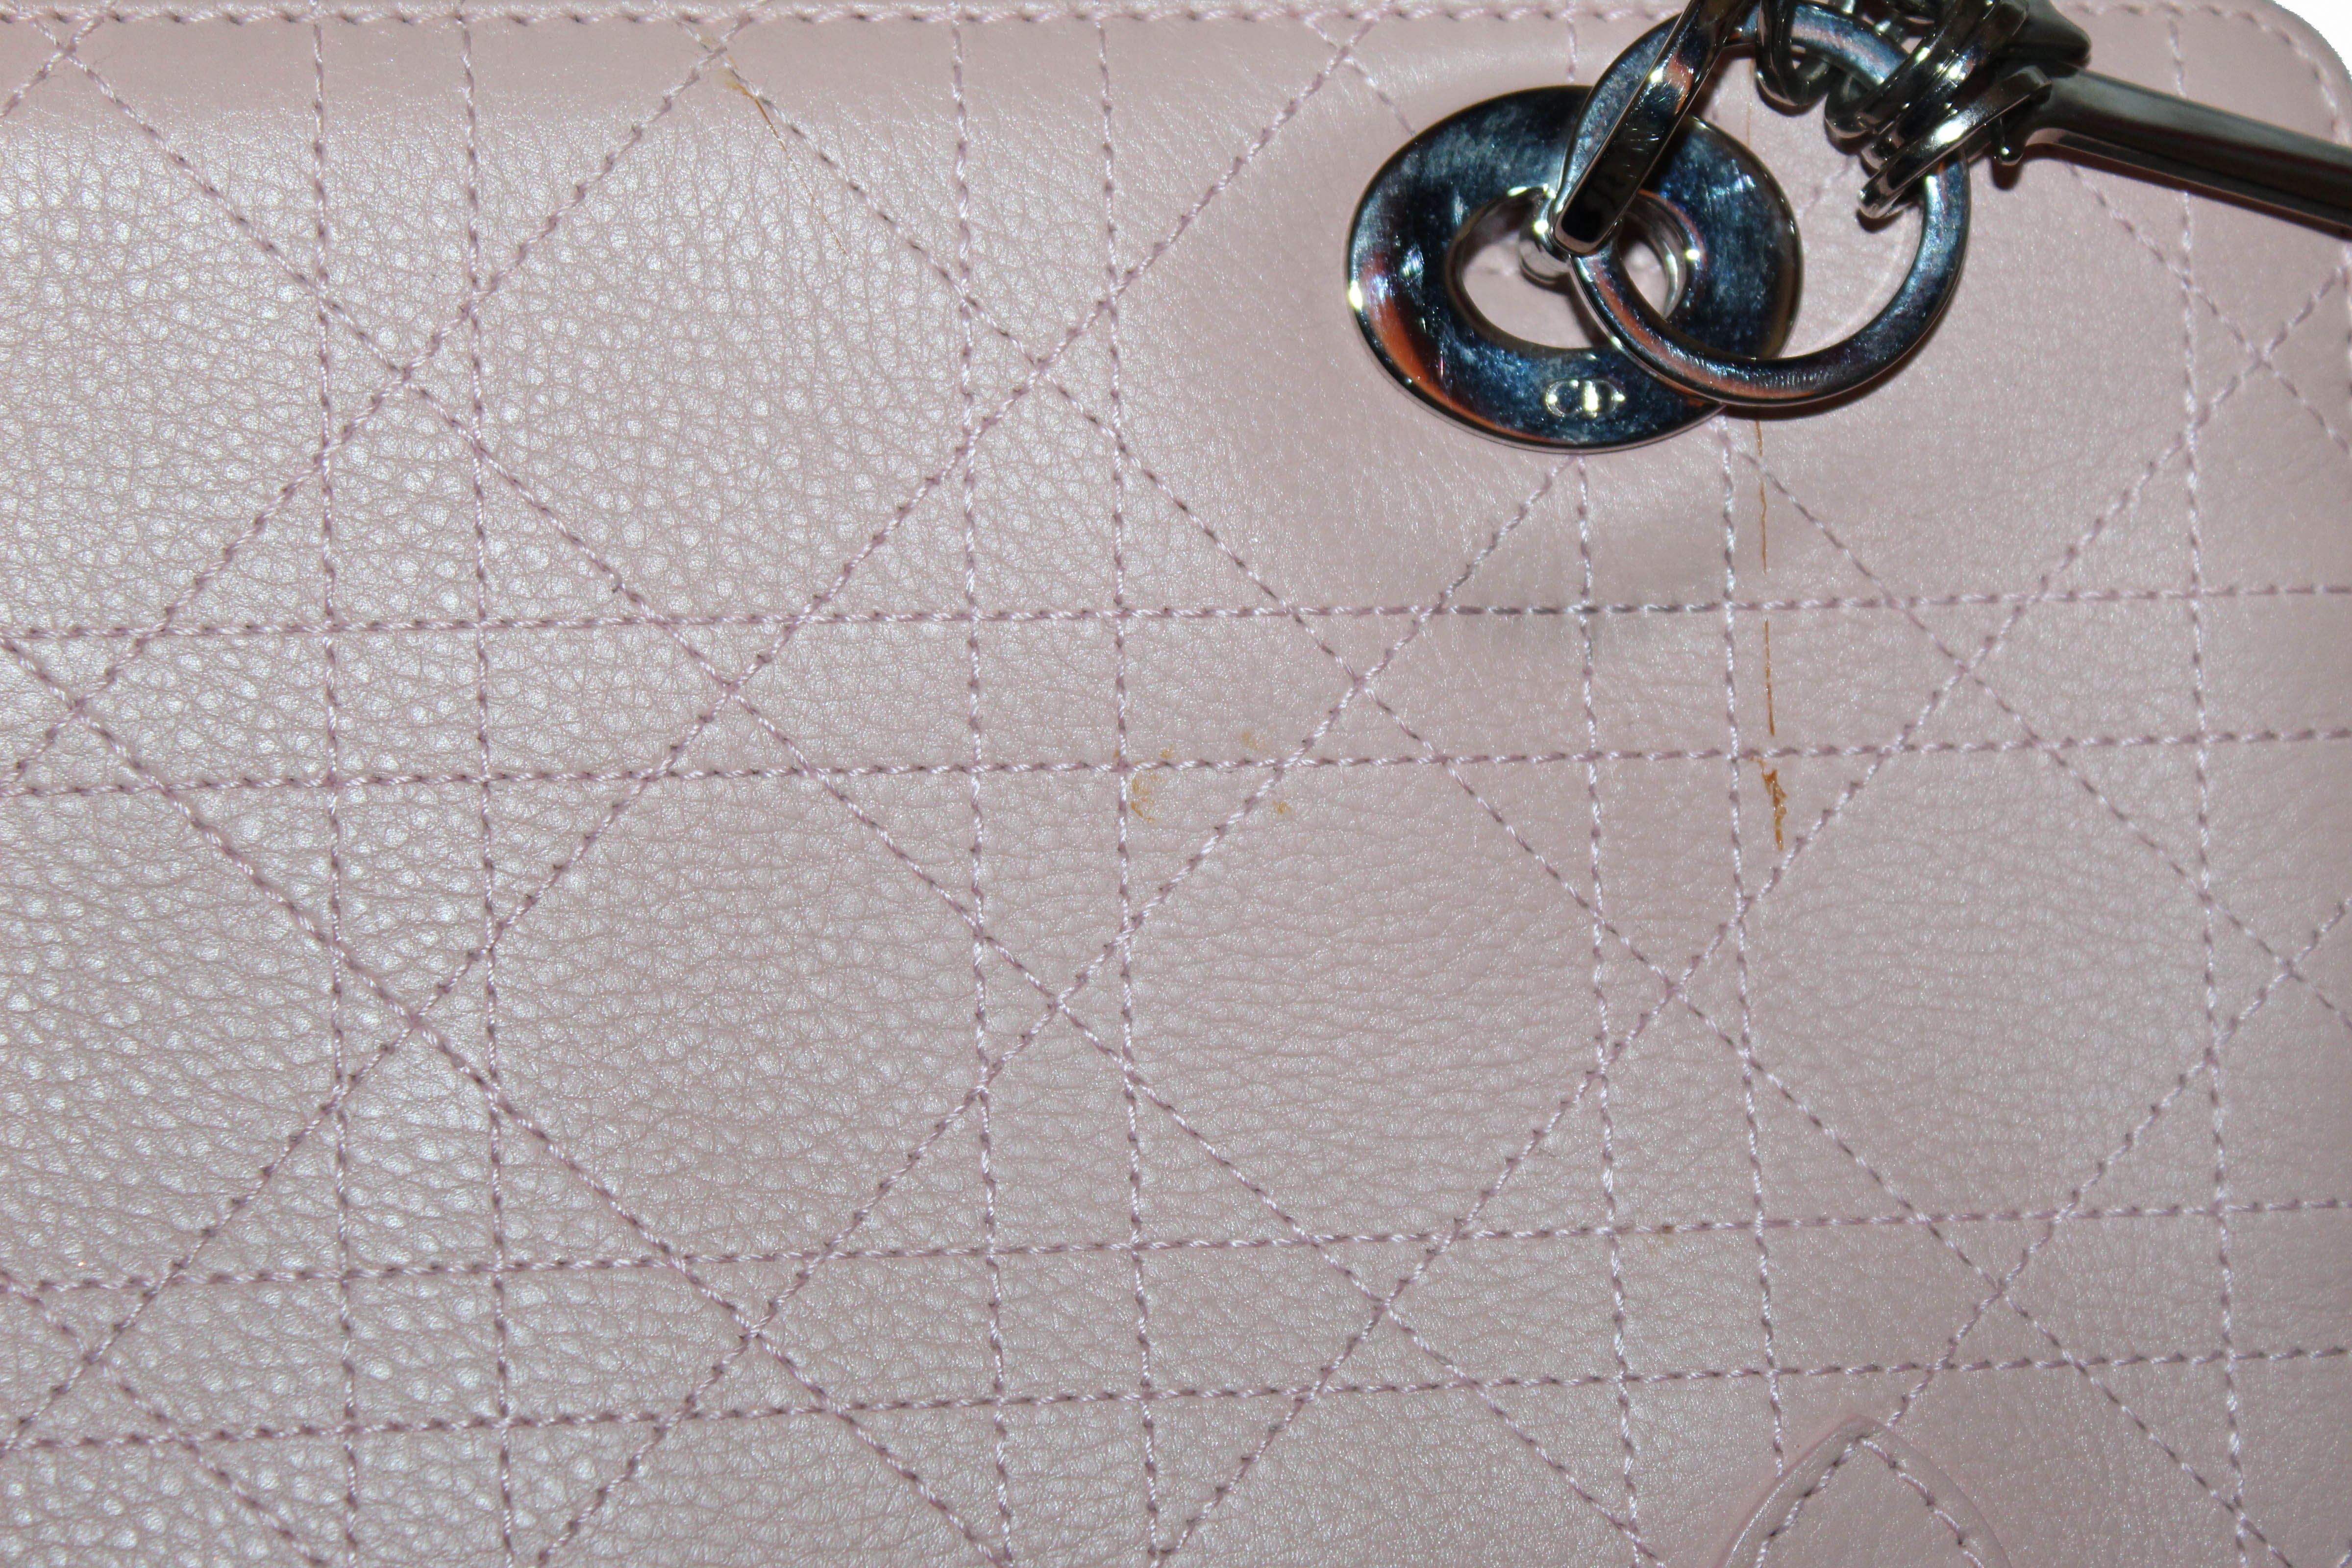 Christian Dior Pink Calfskin Be Dior Bag Small Q9BEWT3PPH000